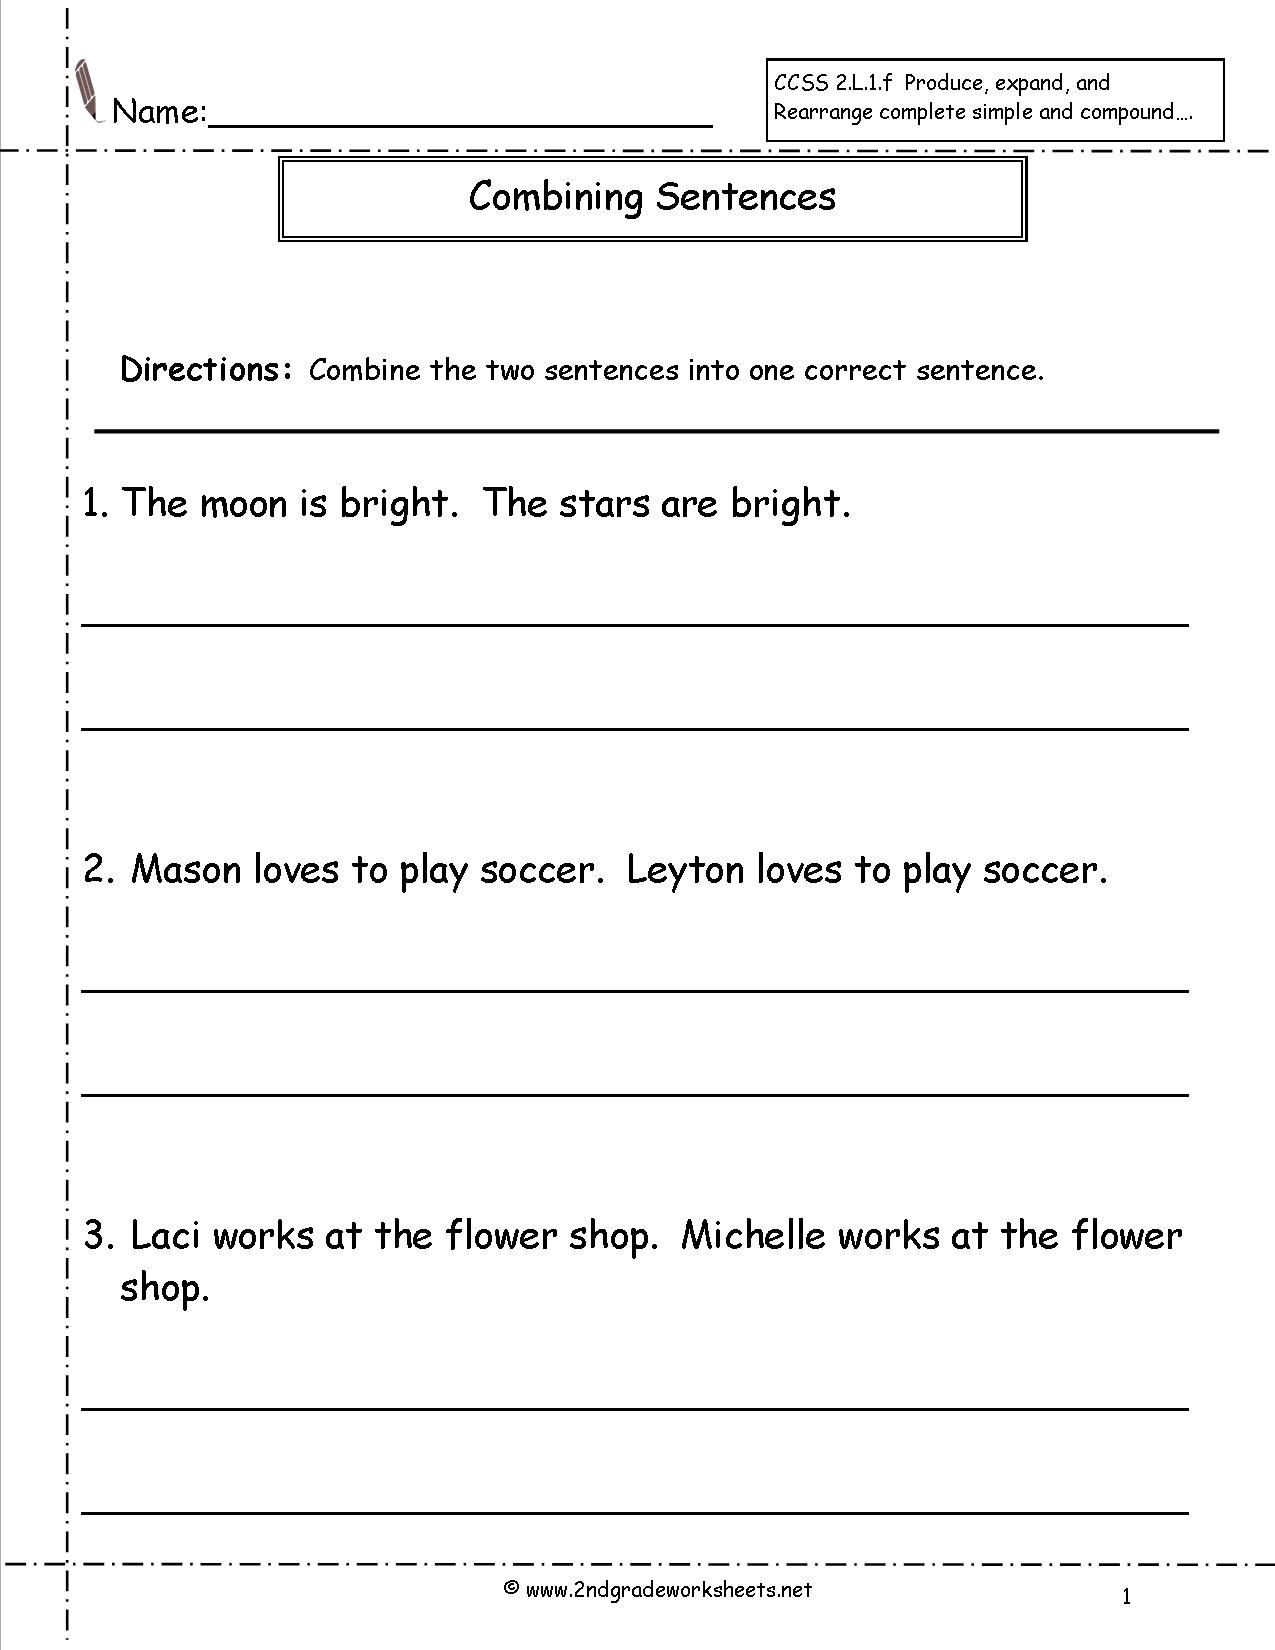 Combining Sentences Worksheets 5th Grade Bining Sentences Worksheet